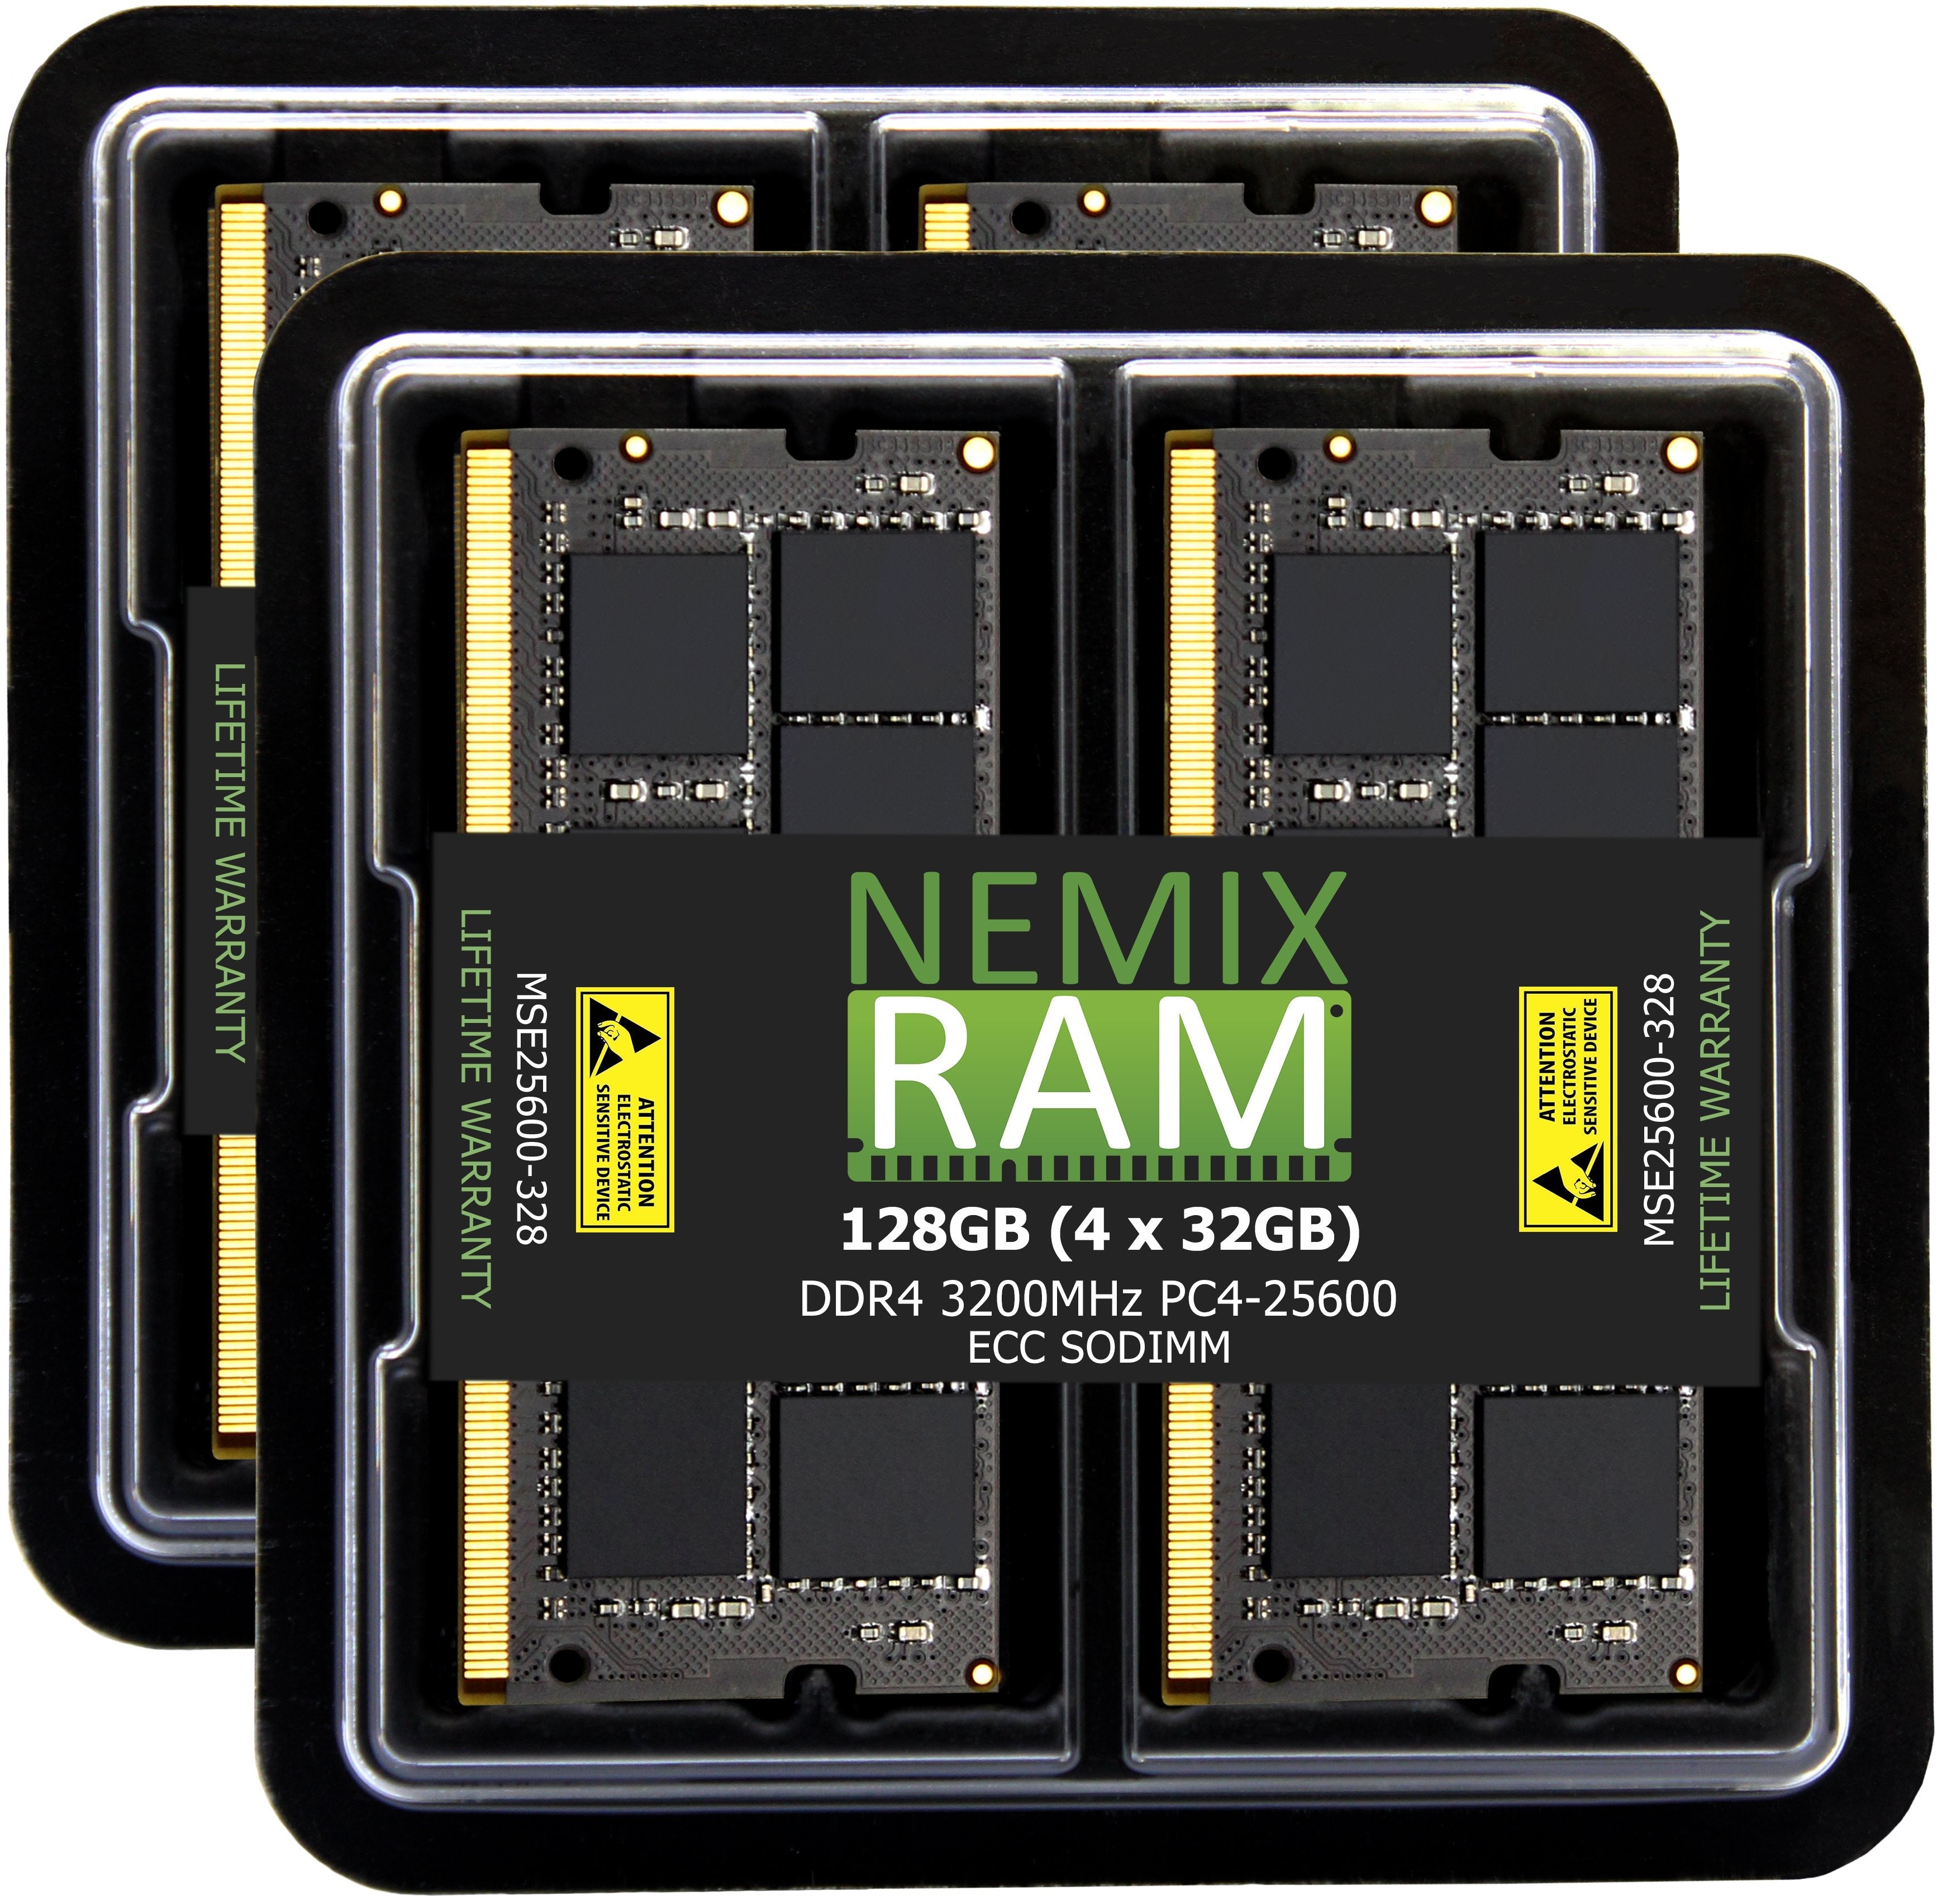 DDR4 3200MHZ PC4-25600 ECC SODIMM 2RX8